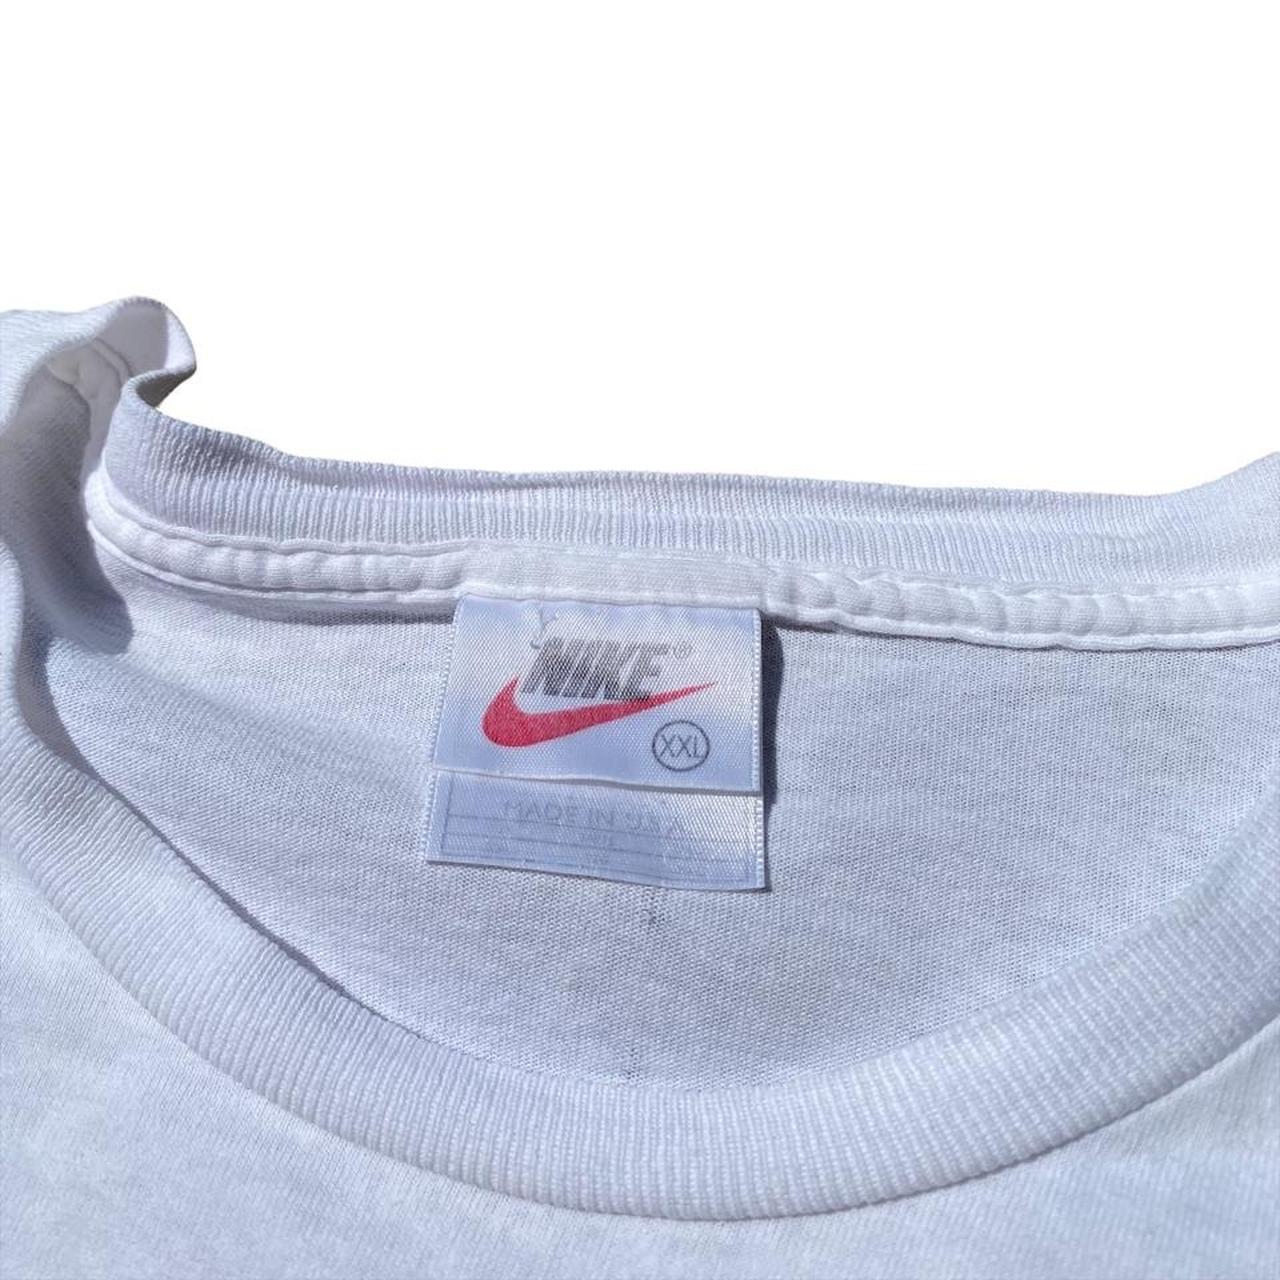 Product Image 3 - Vintage 90s Nike Shirt

Size: XX-Large

Flaws